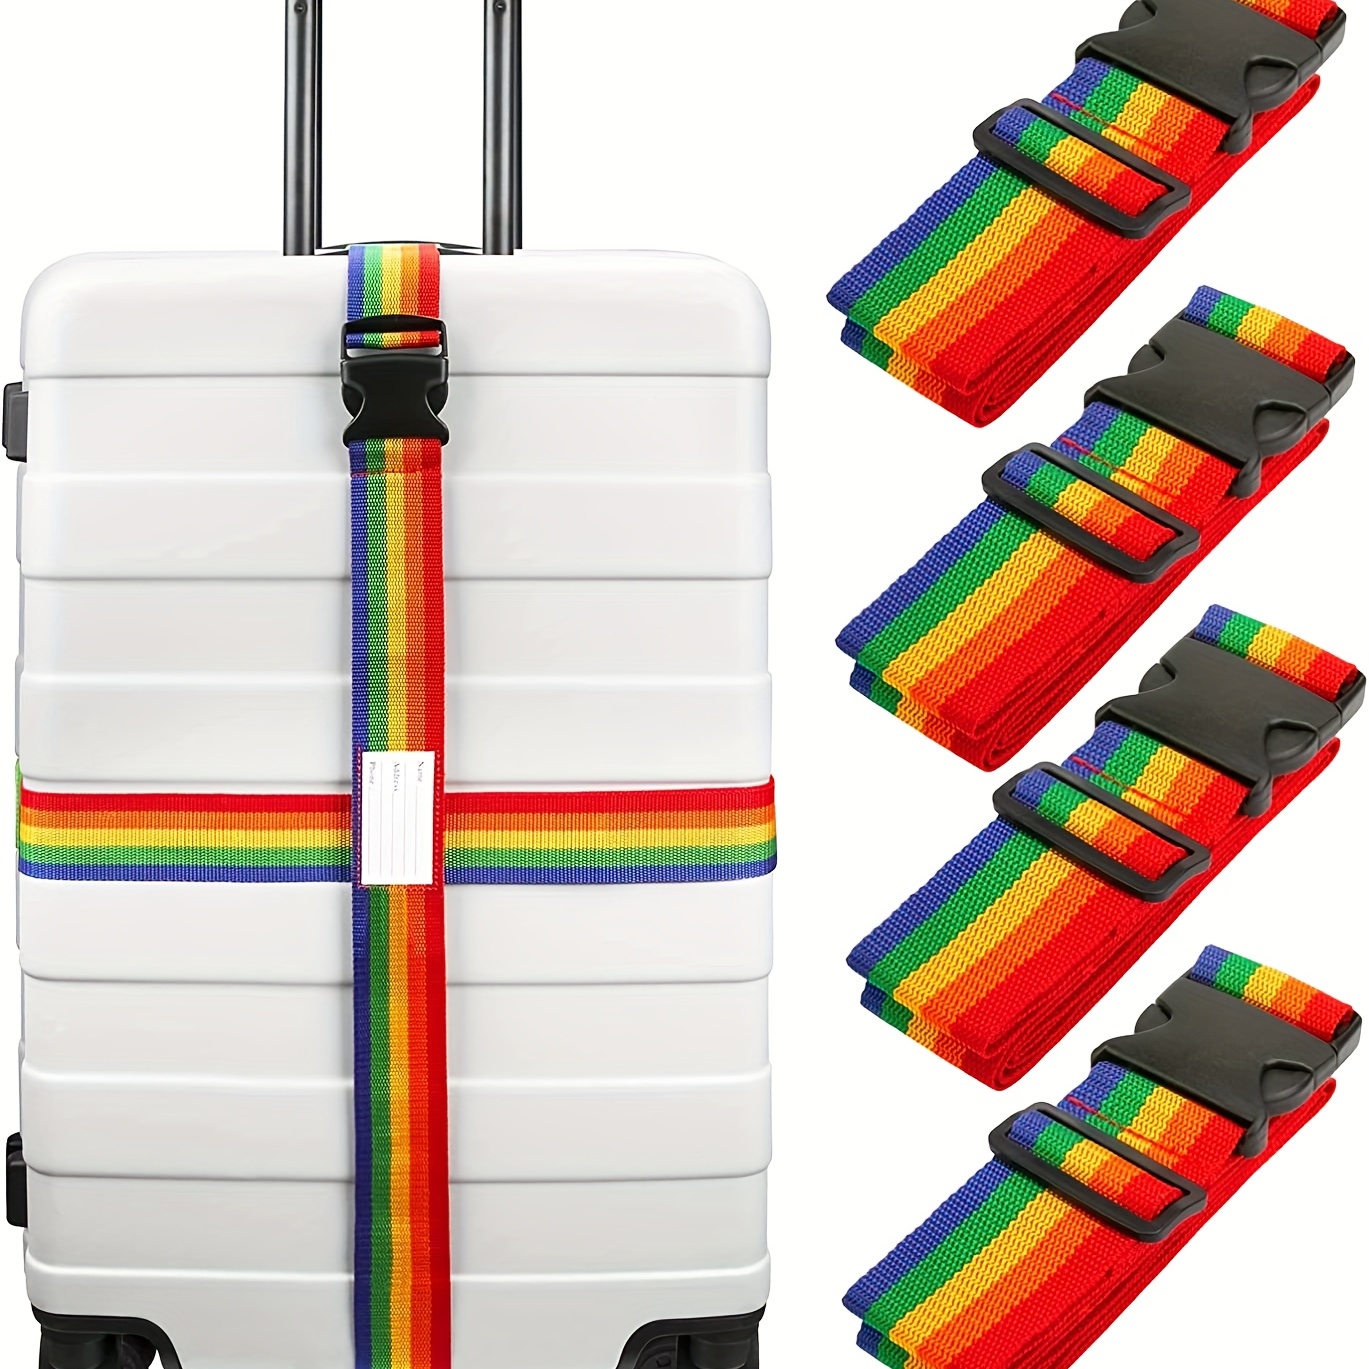 Adjustable Heavy Duty Long Cross Luggage Straps Suitcase Belt